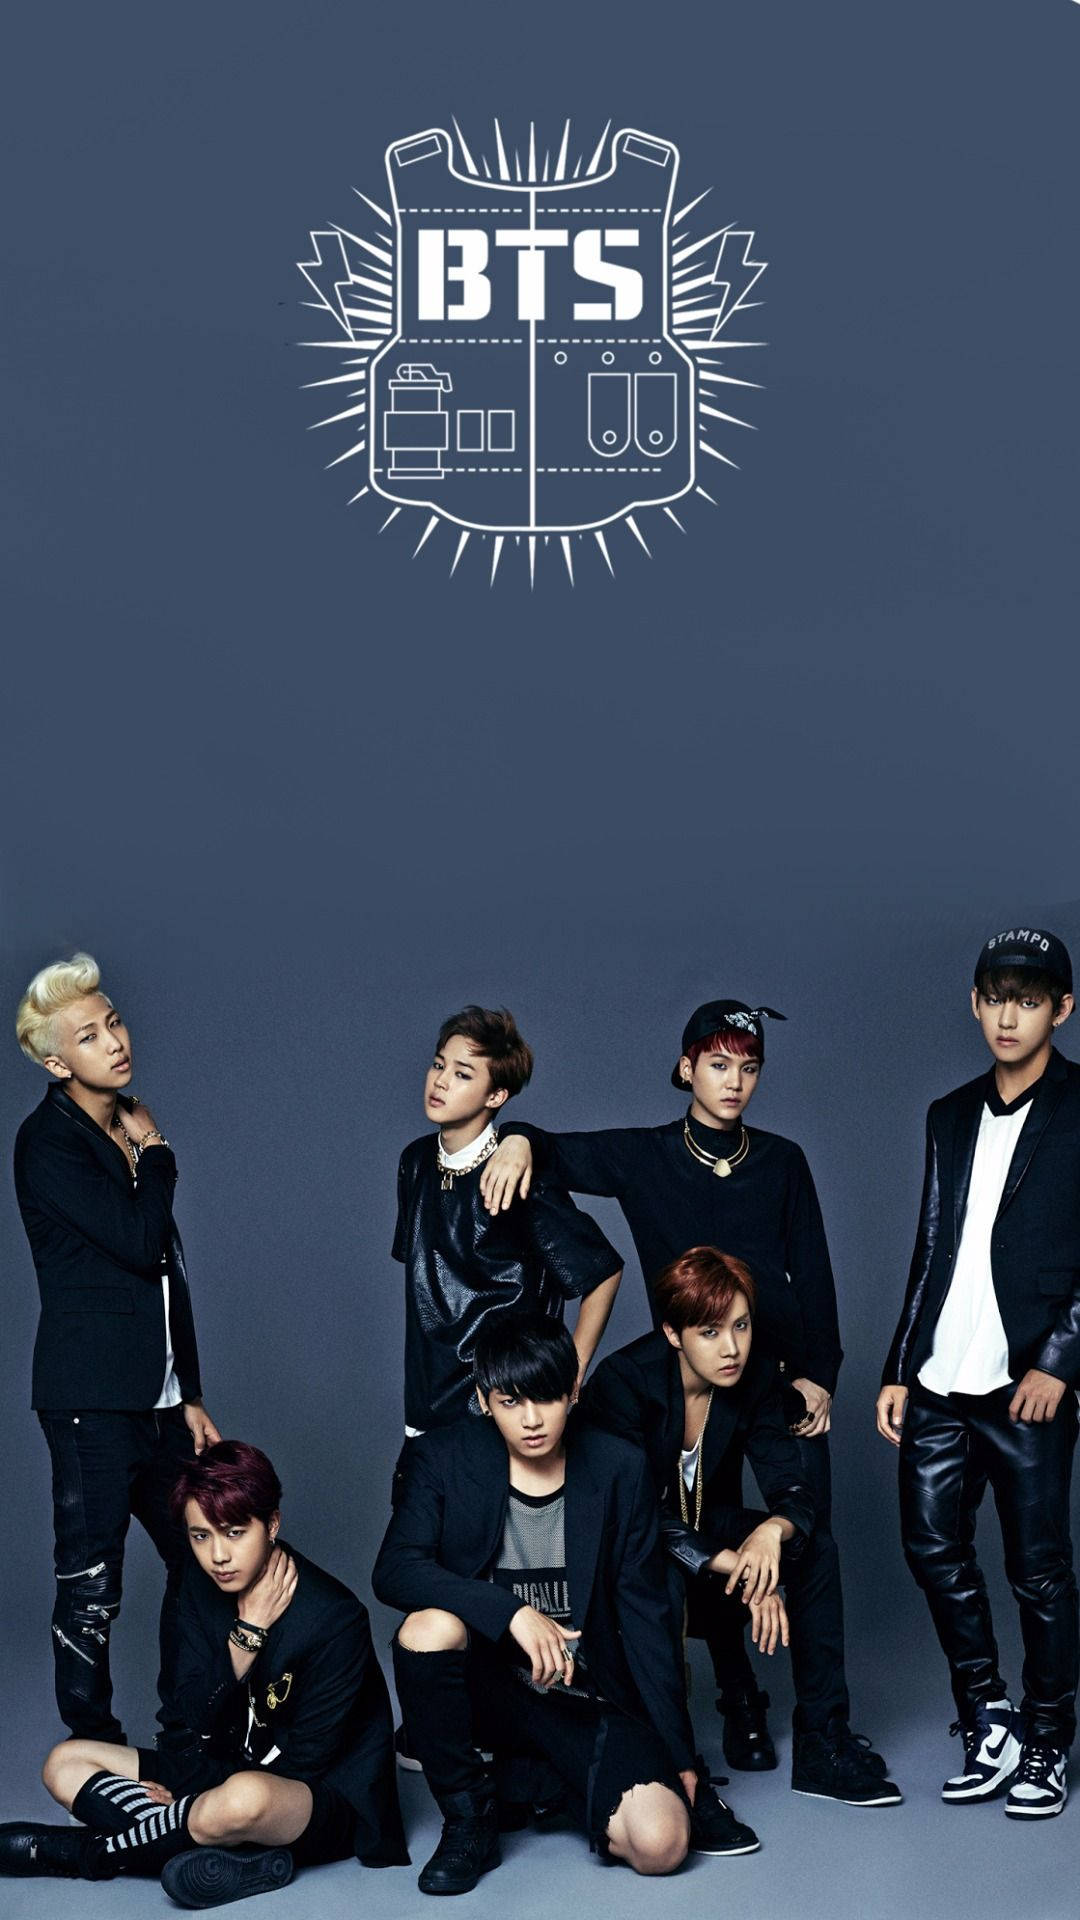 BTS boyband members V, Jungkook, Jimin, Suga, Jin, Rm and J-hope in black casual clothes.